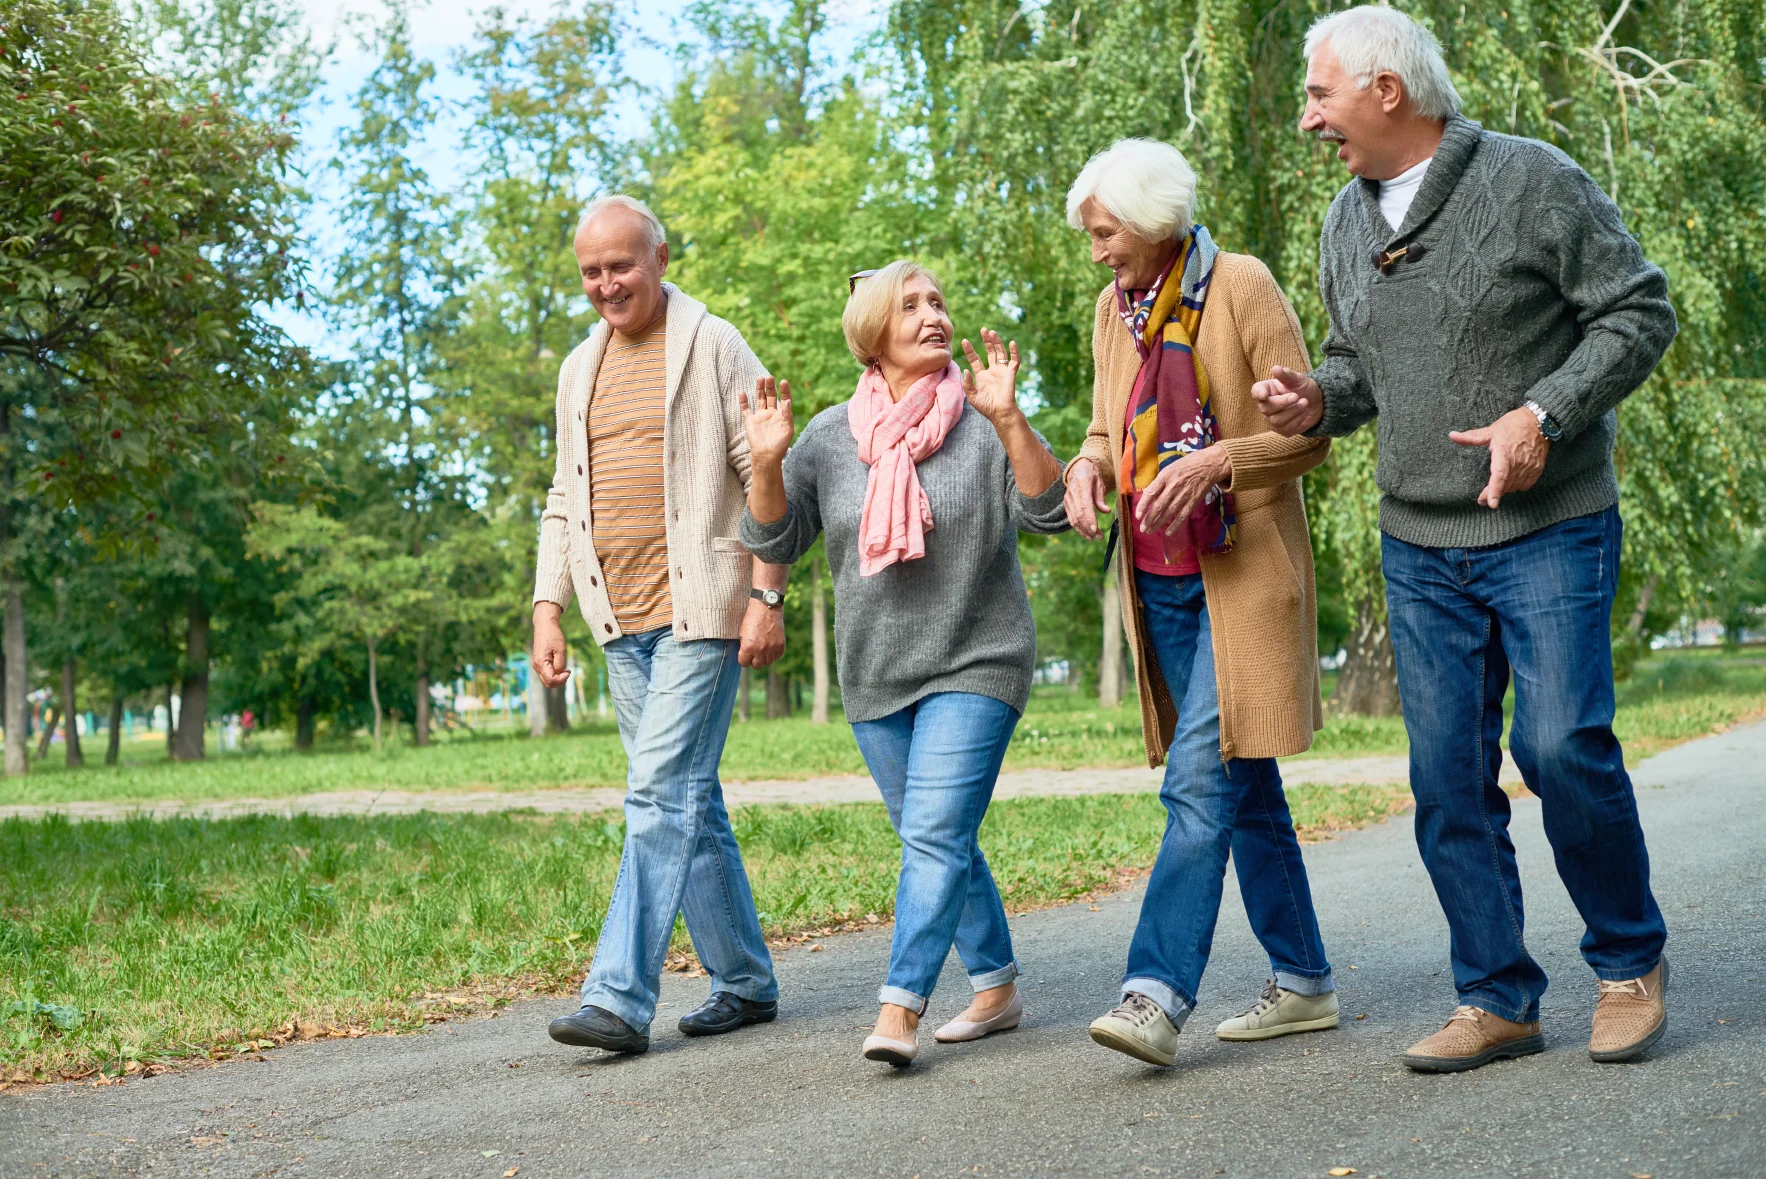 9 Health Benefits of Walking for Seniors